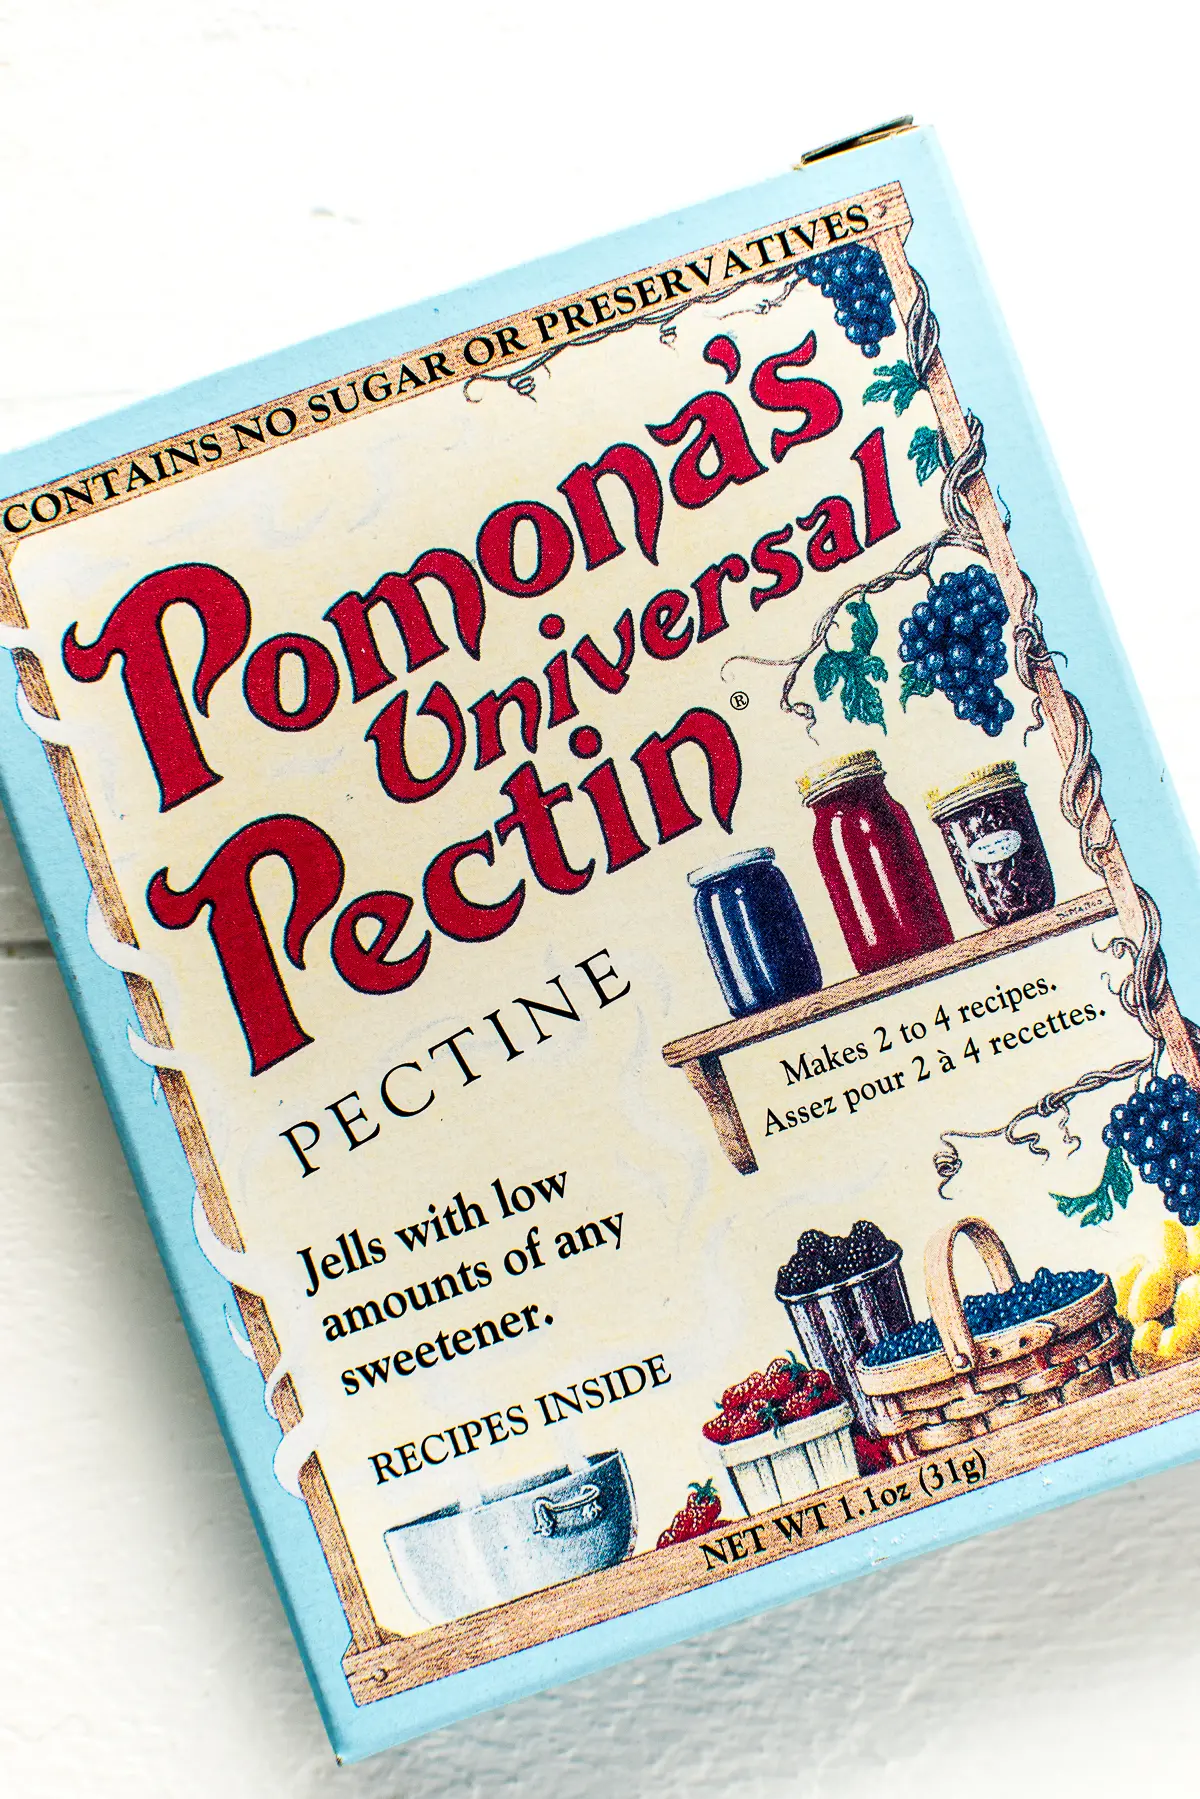 A package of Pomona's Universal Pectin.